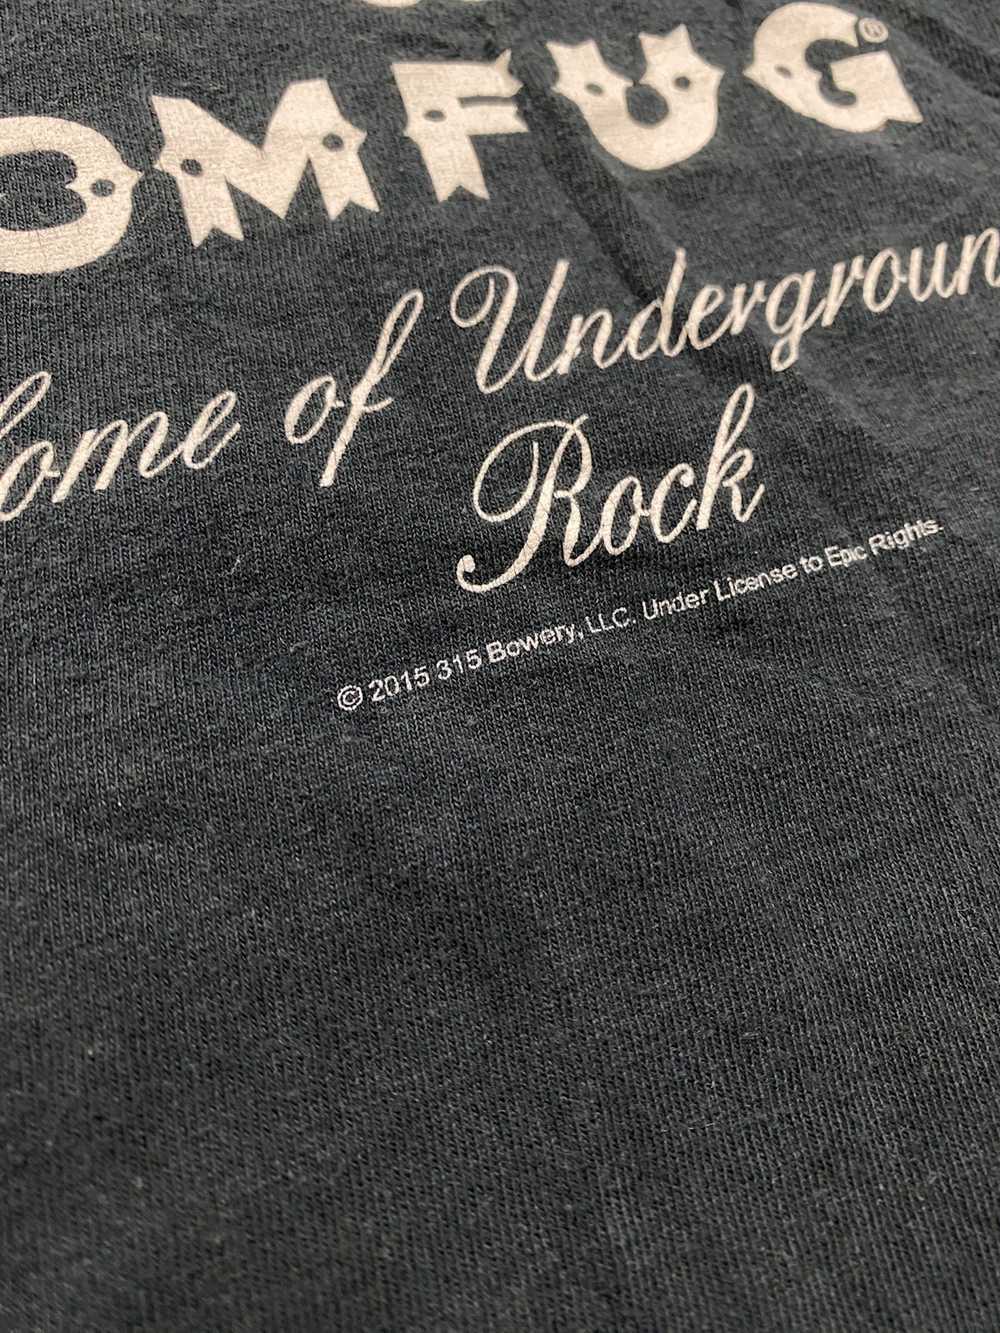 Band Tees × Rock T Shirt × Vintage Vintage CBGB O… - image 5